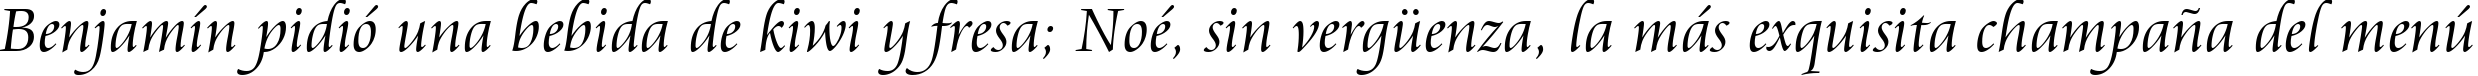 Пример написания шрифтом Cataneo Light BT текста на испанском